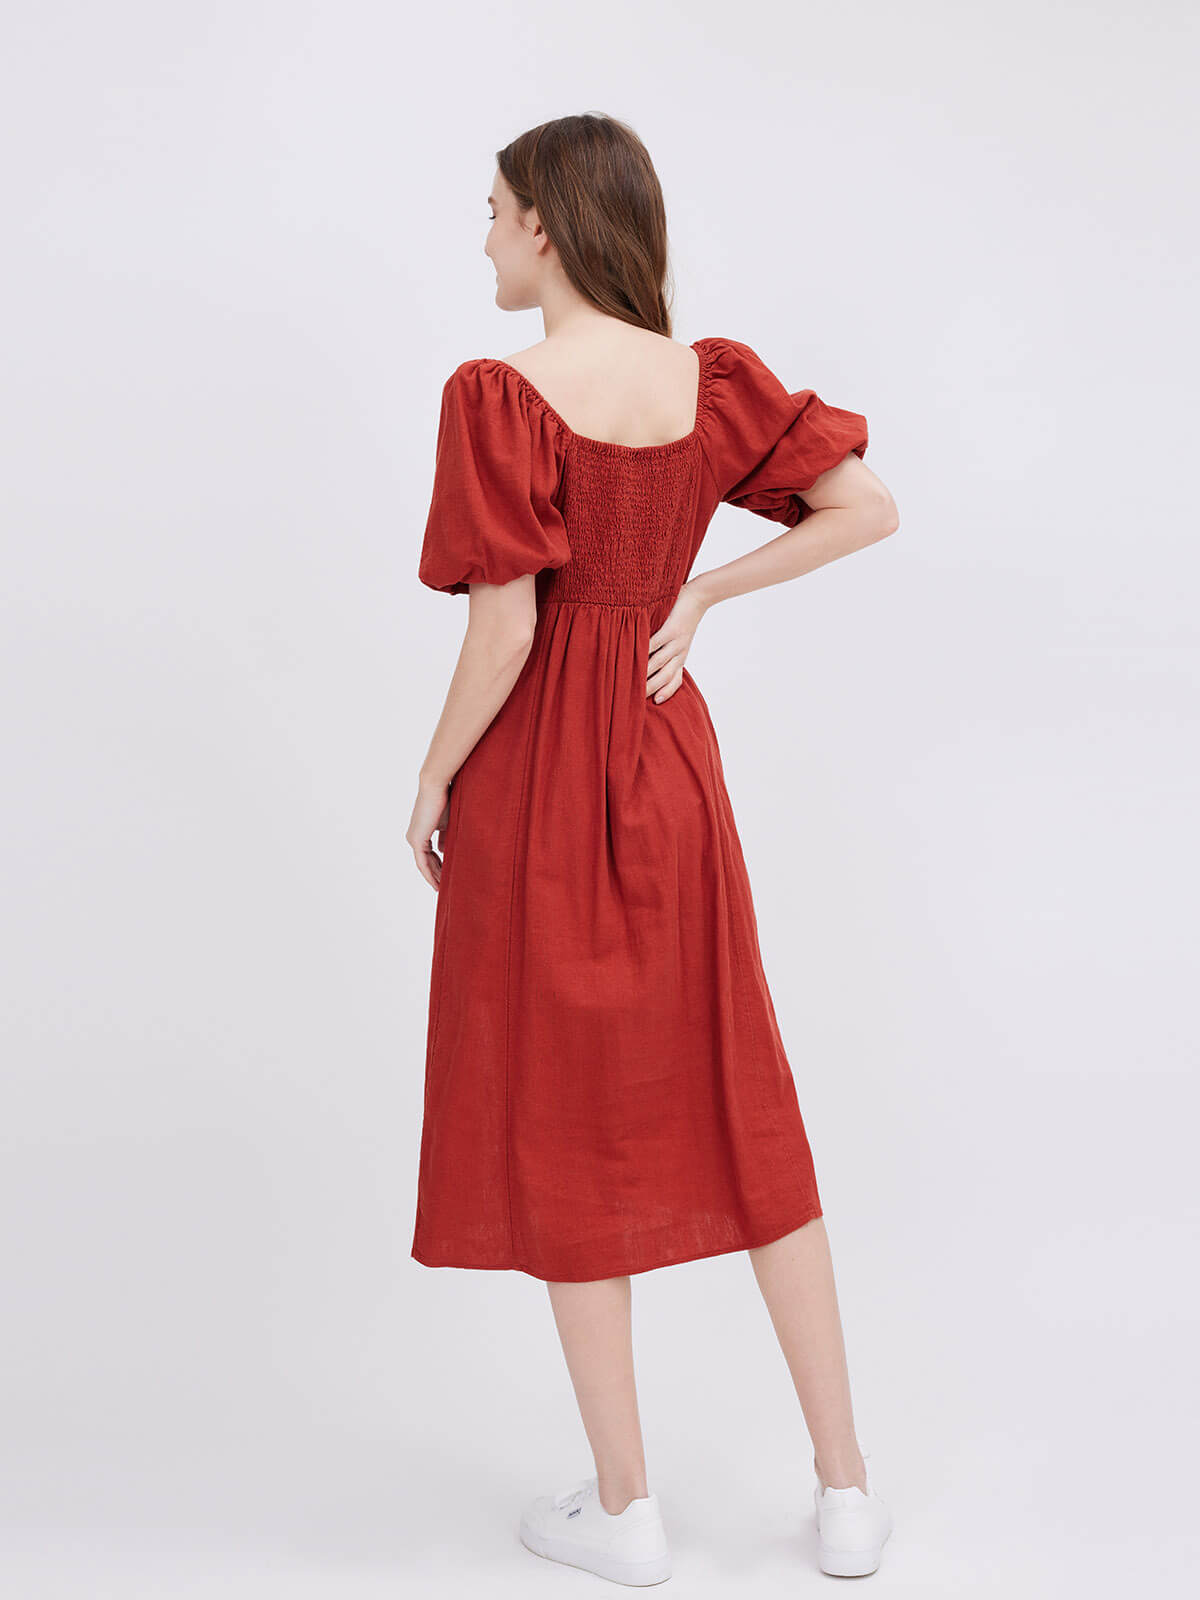 Brick Red Short Puff Sleeve Dress for Women